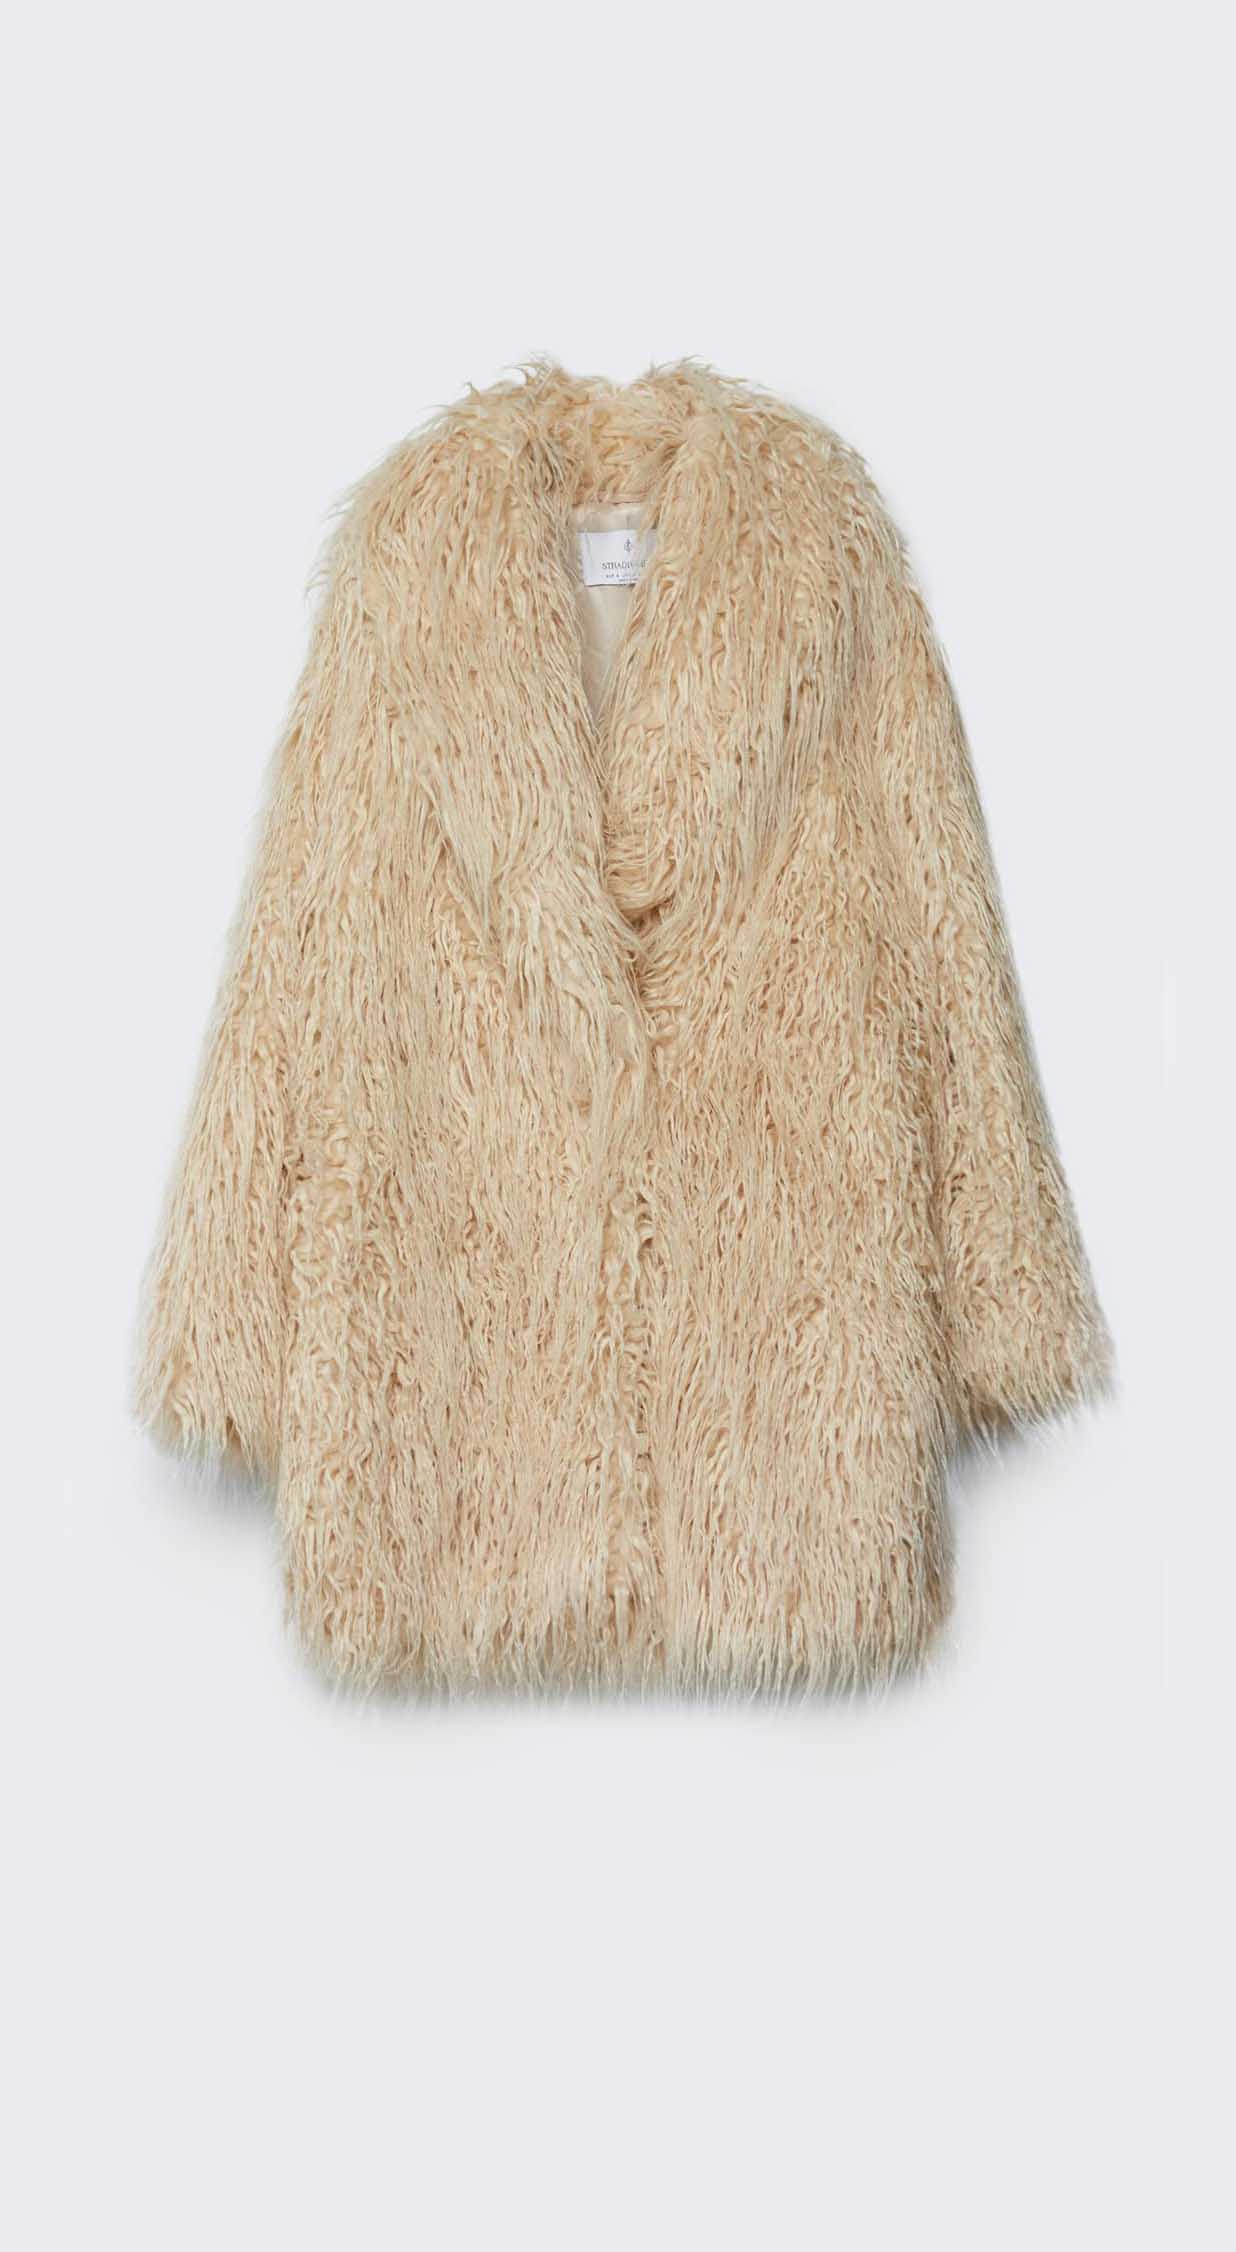 abrigos faux fur